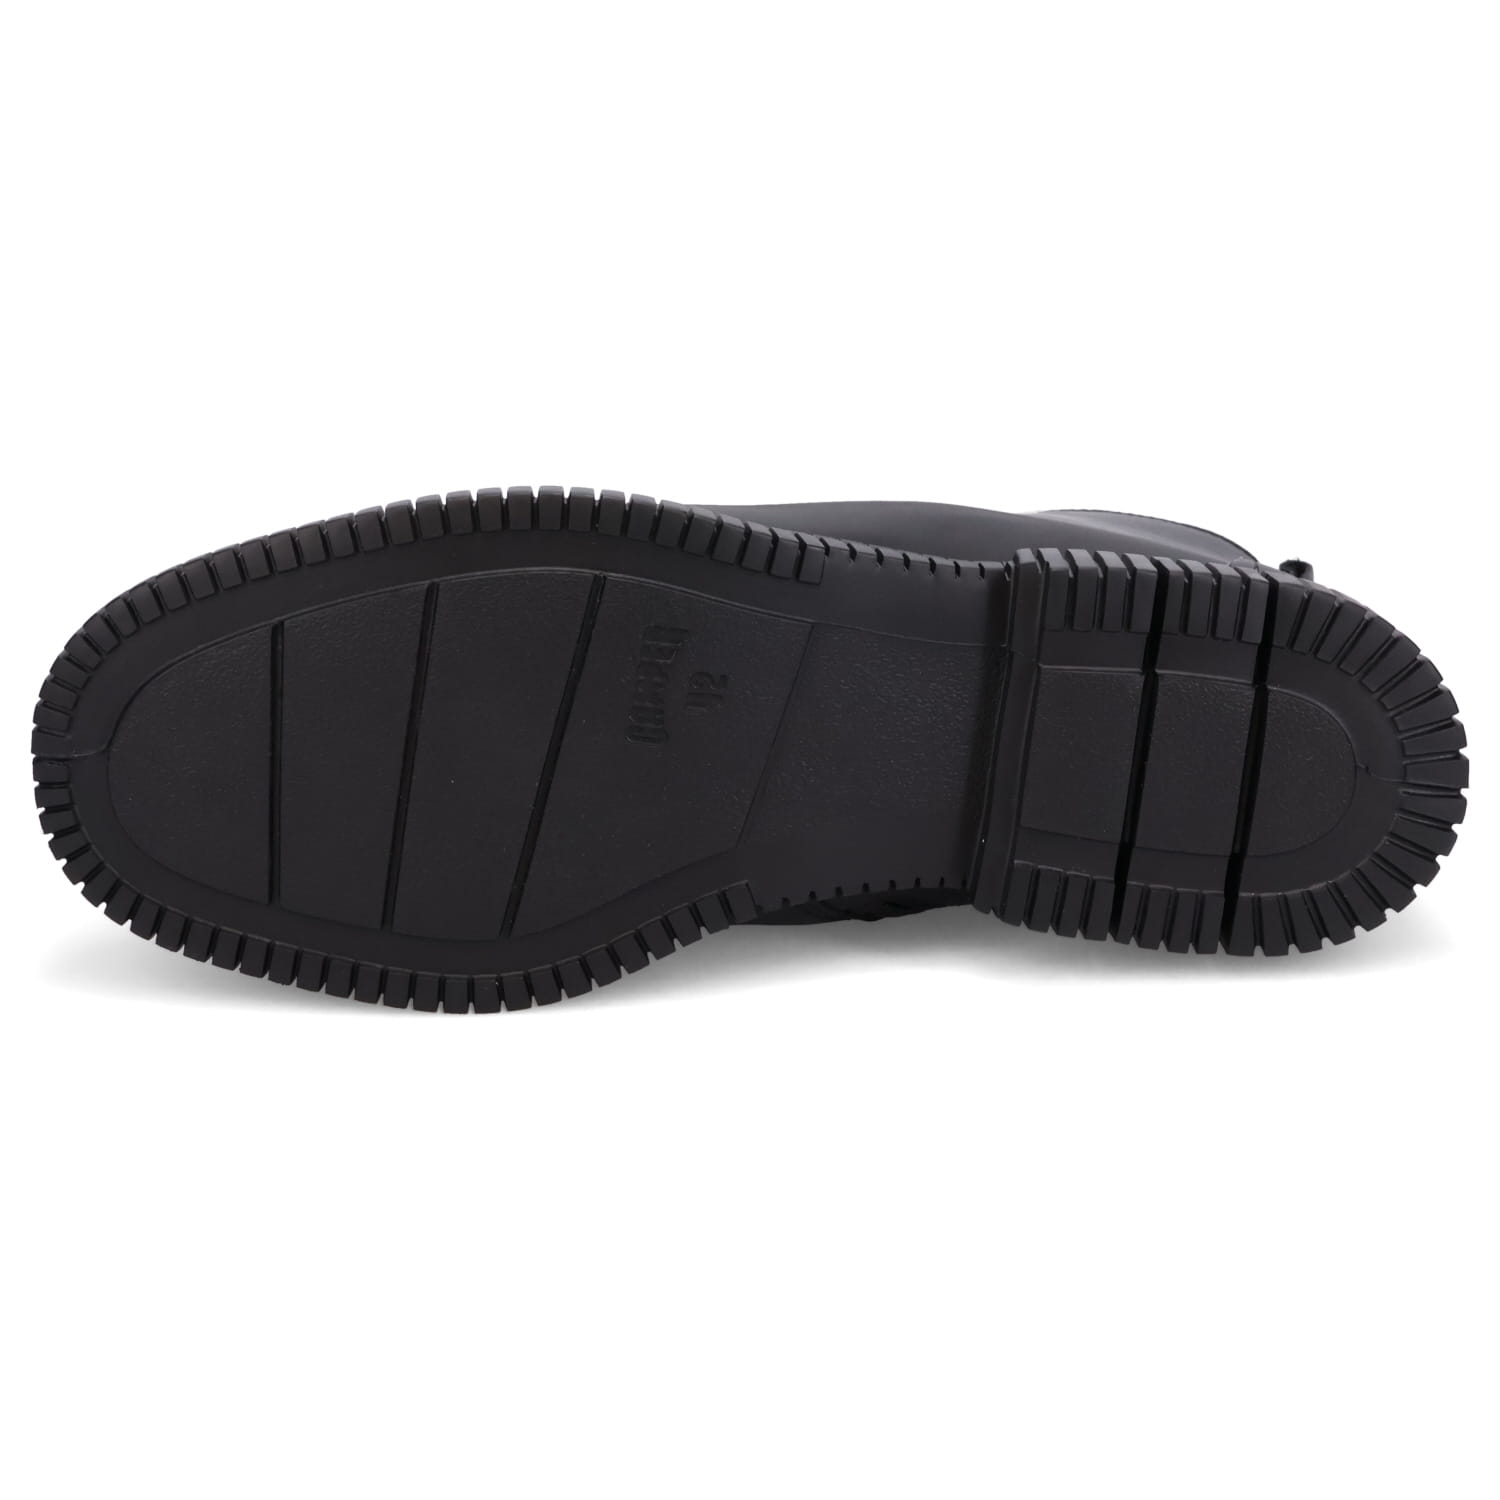 【 OFFクーポン 】 カンペール CAMPER 靴 スニーカー シューズ ピクス メンズ PIX ブラック 黒 K300277 5